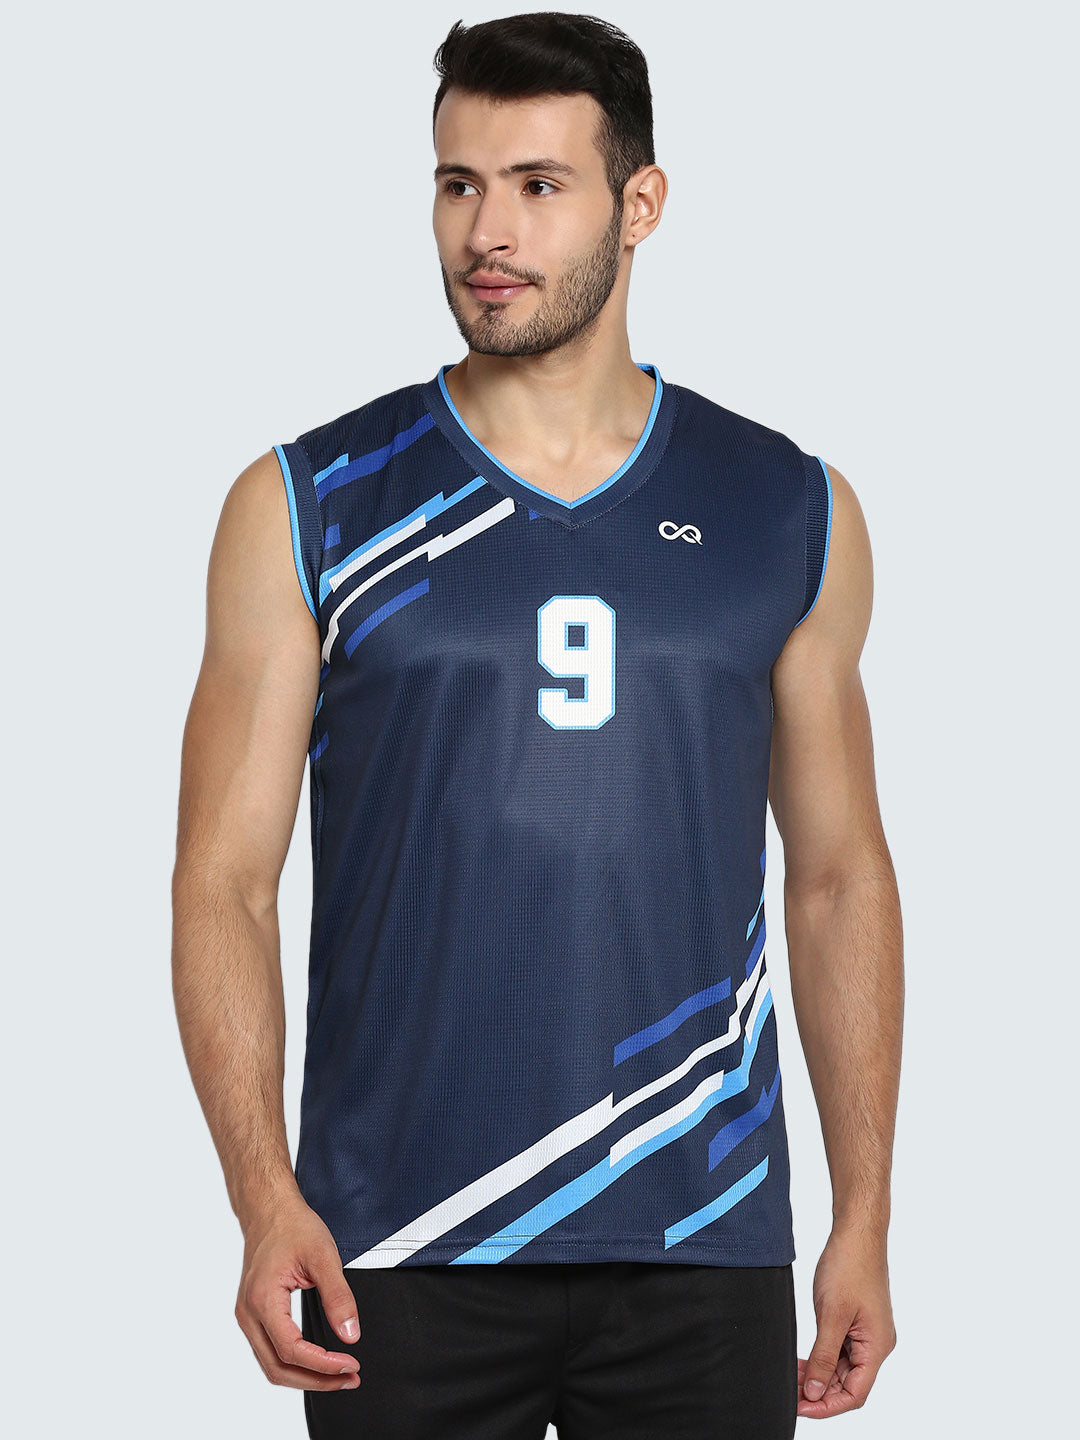 Men's Abstract Basketball Vest: Navy Blue